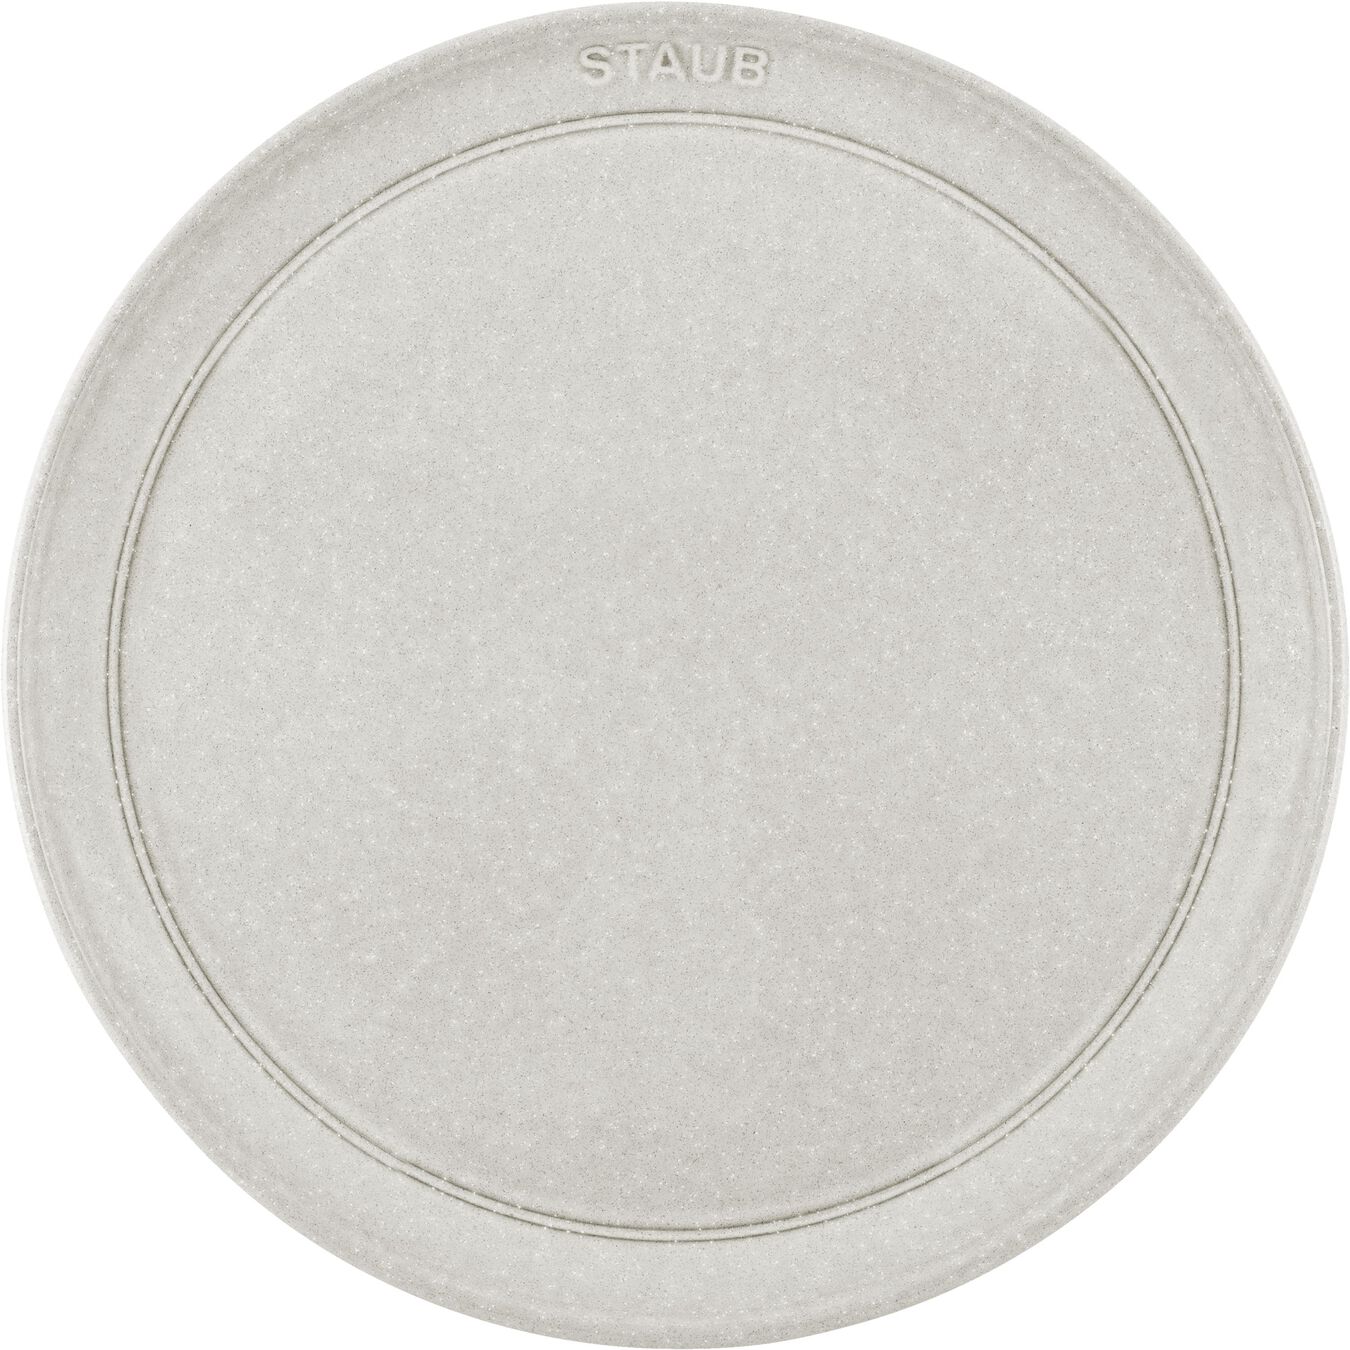 26 cm ceramic round Plate flat, white truffle,,large 2